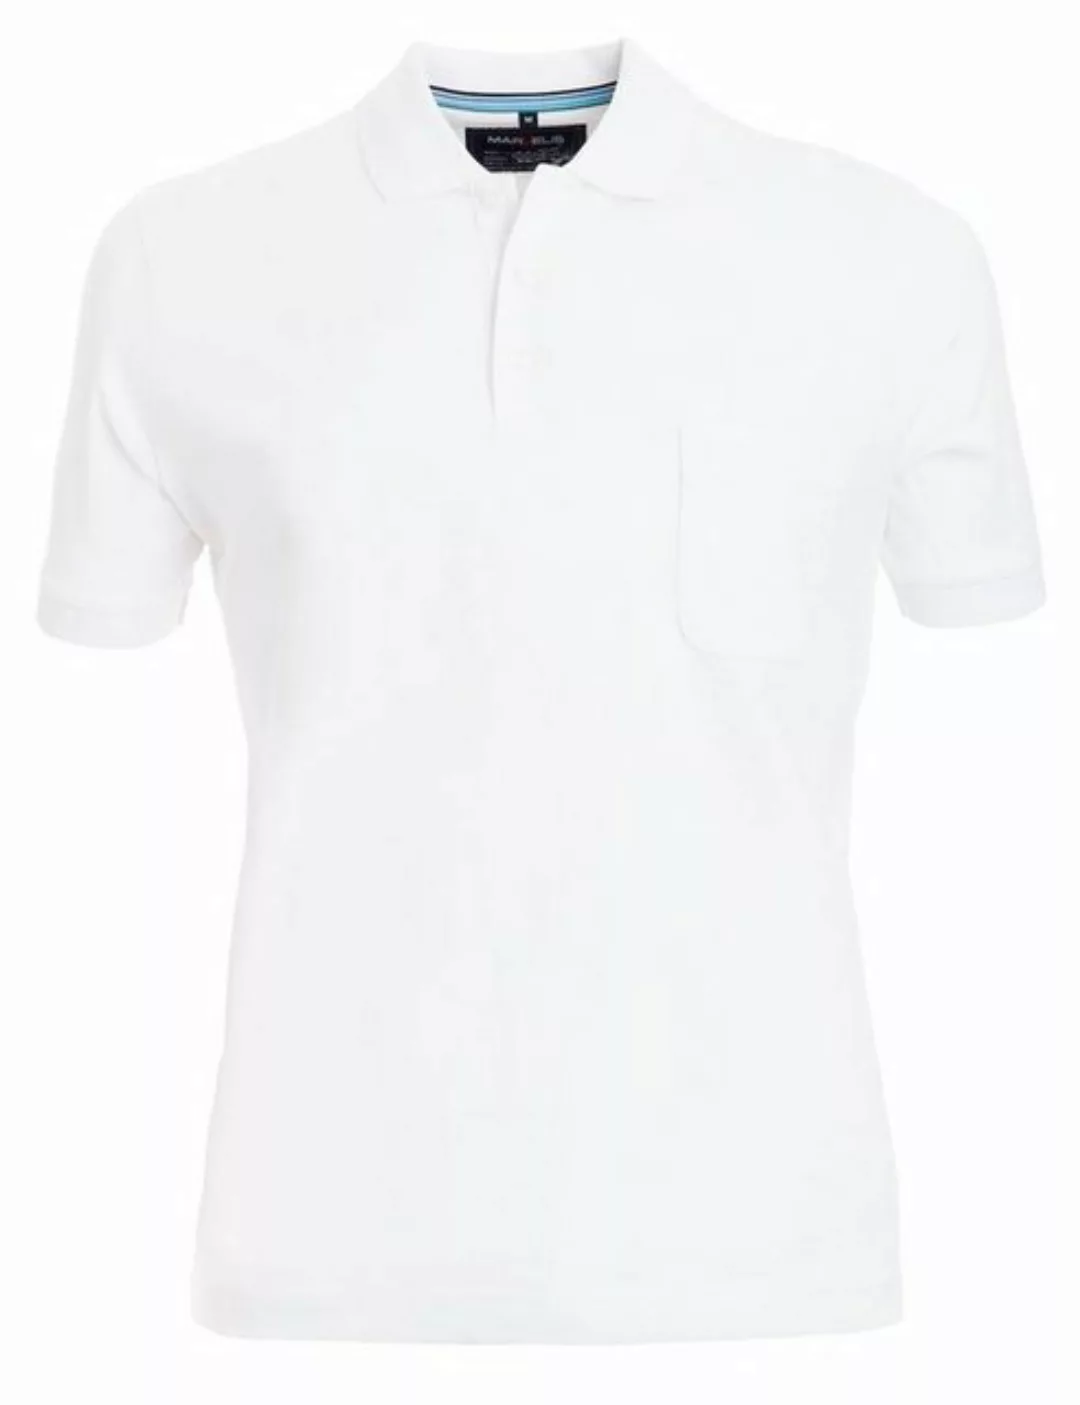 MARVELIS Poloshirt Funktions Poloshirt Kurzarm Quick Dry günstig online kaufen